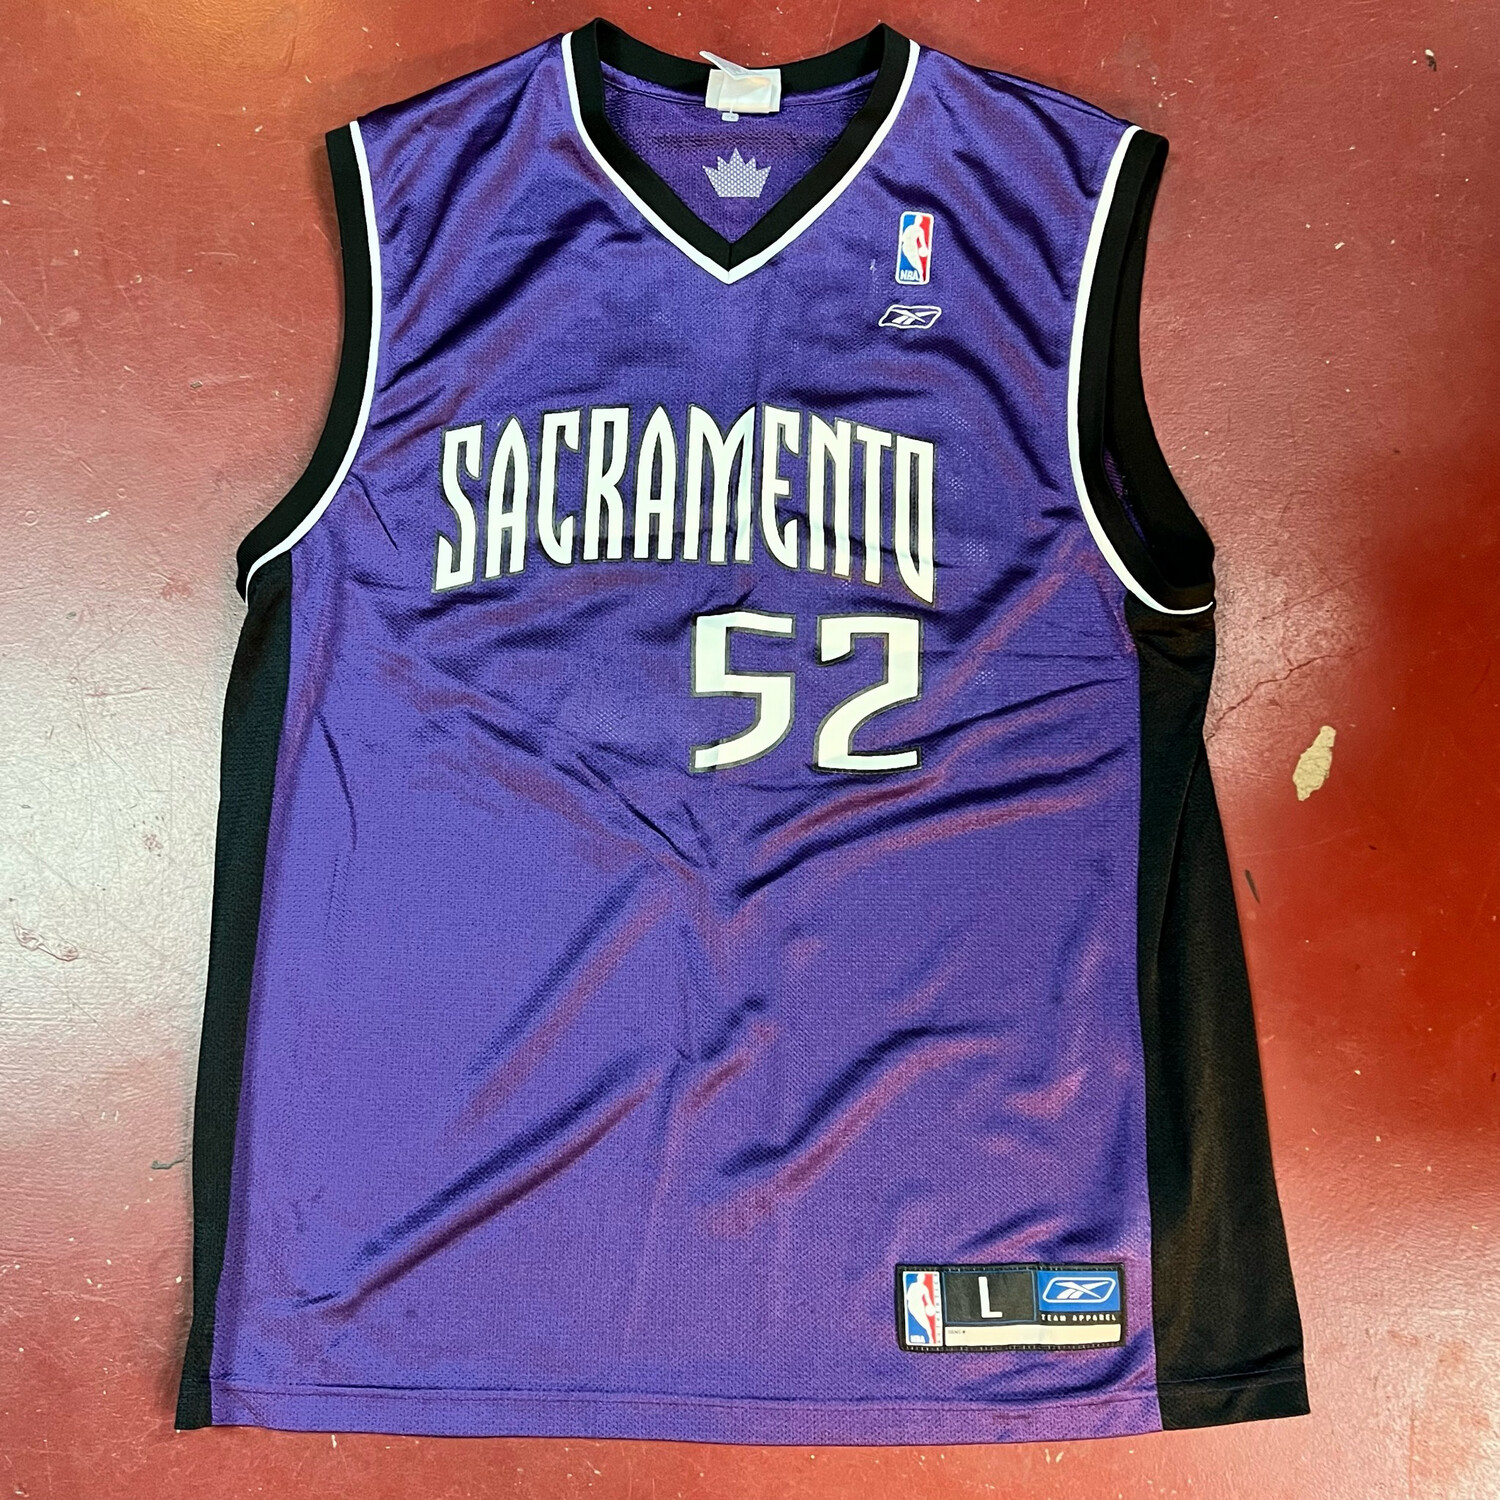 Reebok Sacramento Kings Basketball Jersey. Miller 52